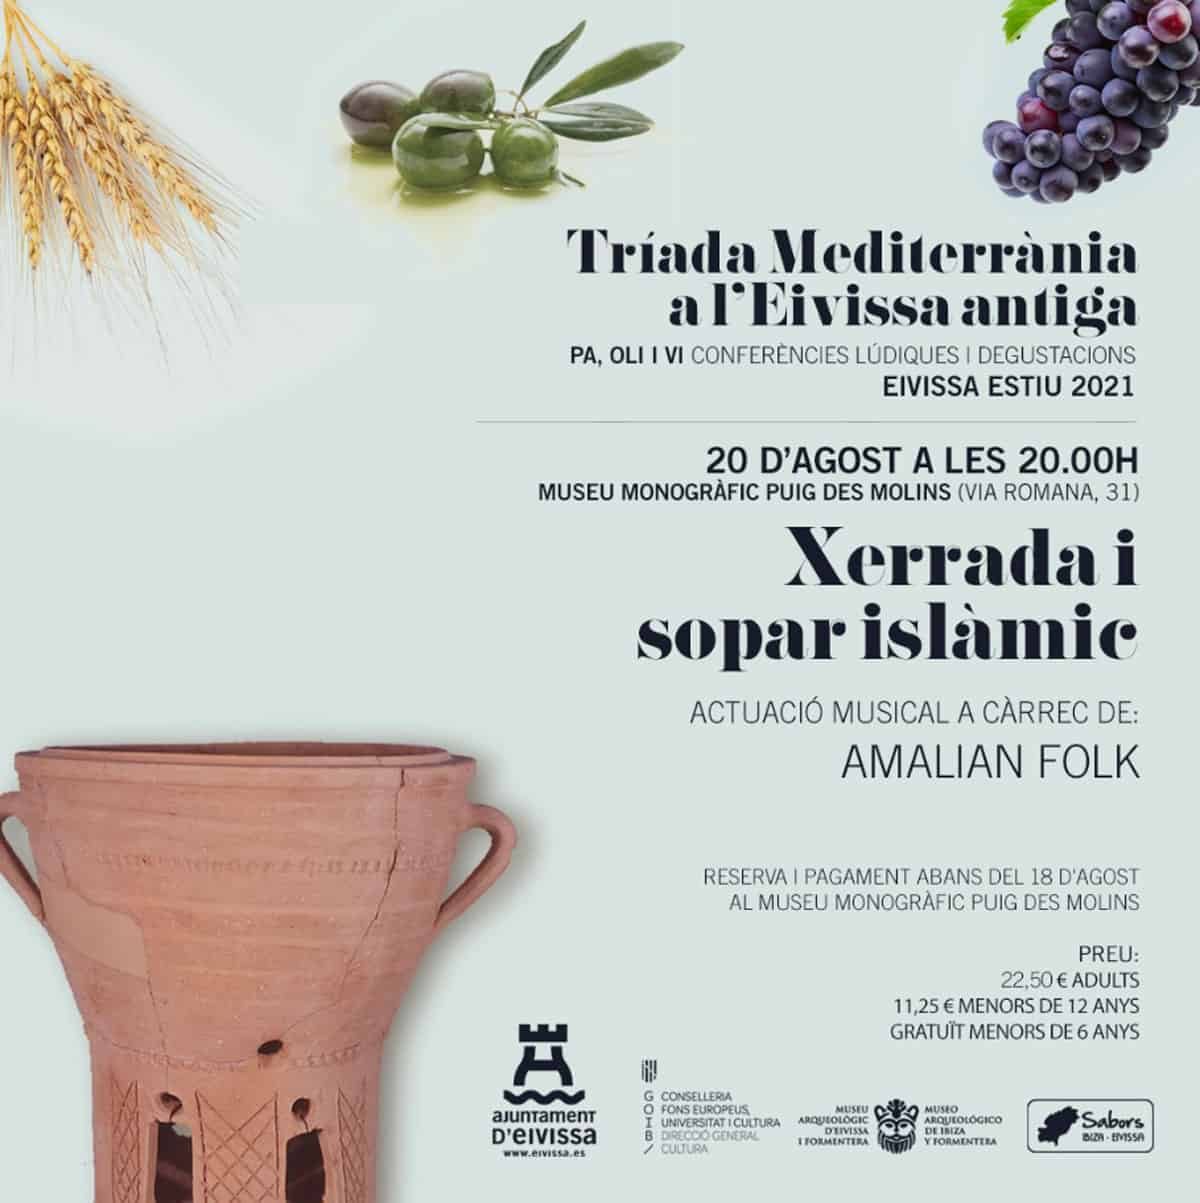 talk-food-islamic-triada-mediterranea-ibiza-2021-welcometoibiza